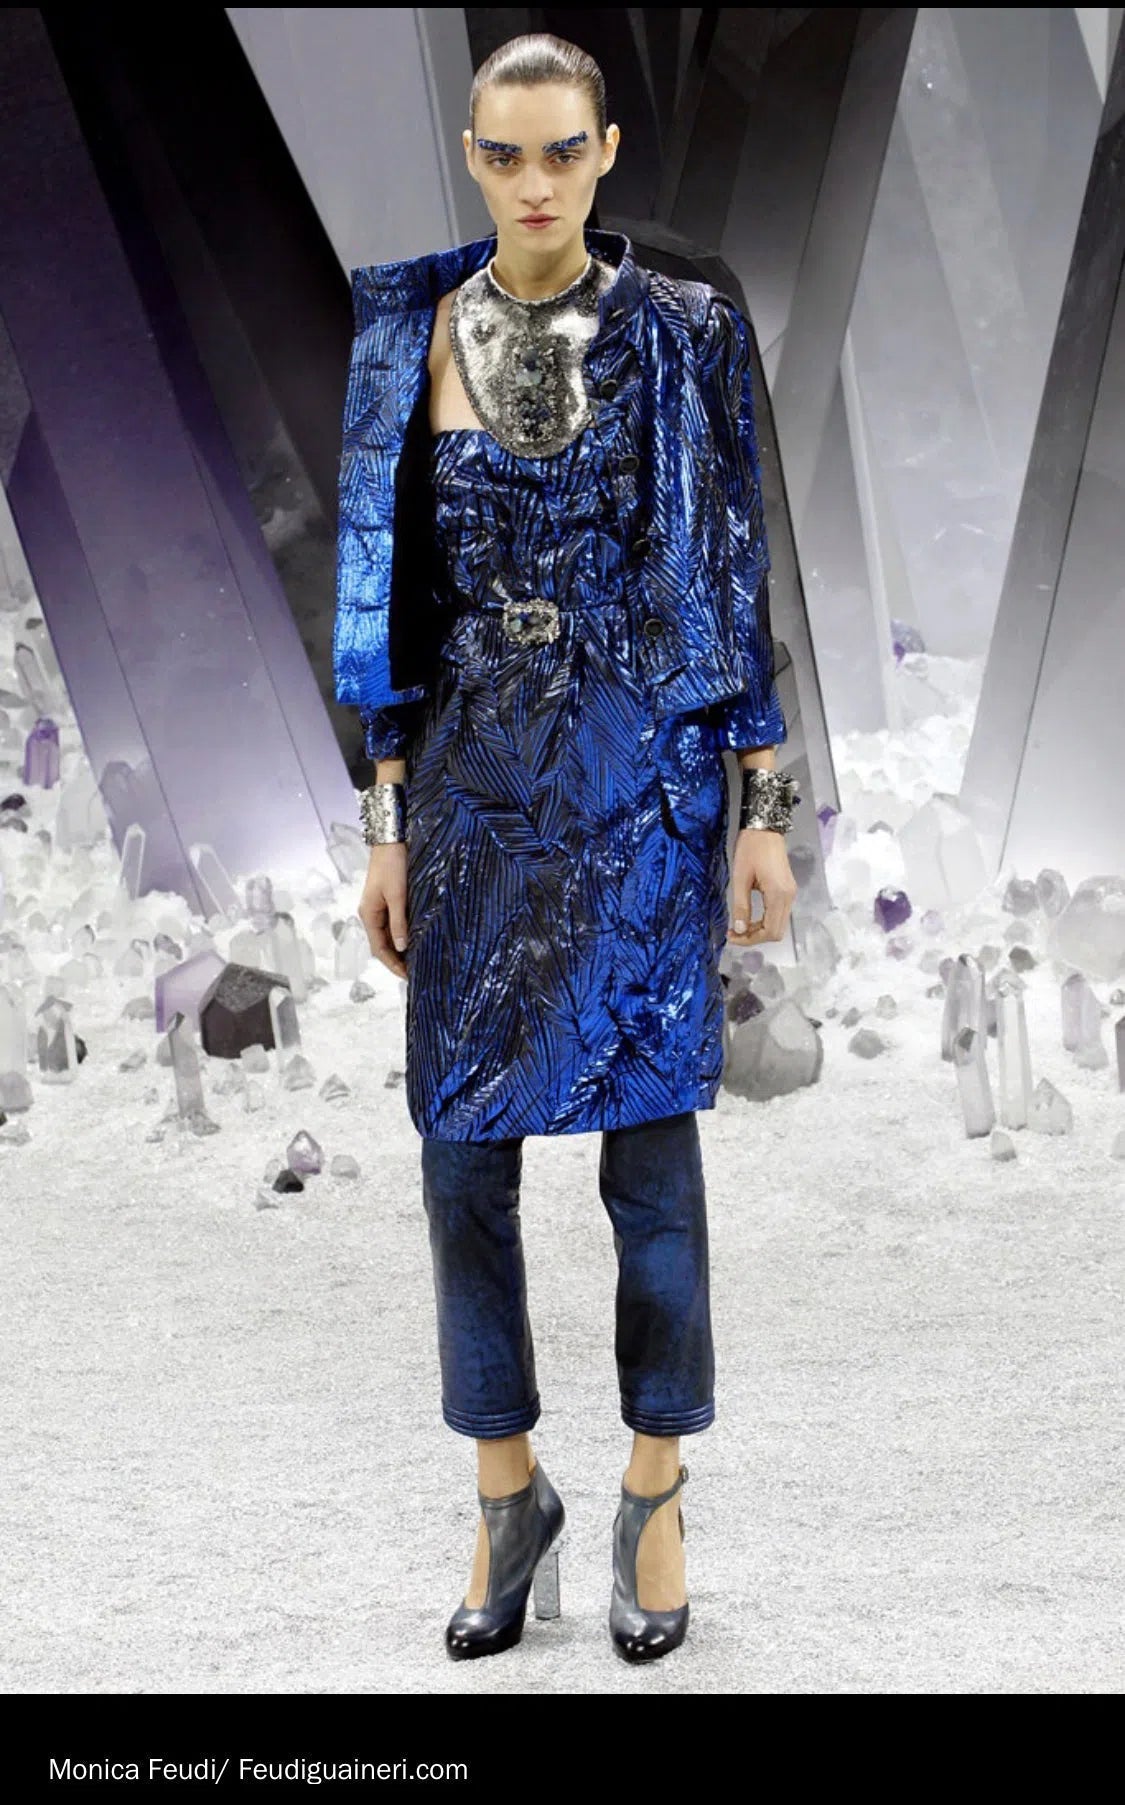 Chanel Blue Metallic Strapless Dress - Foxy Couture Carmel